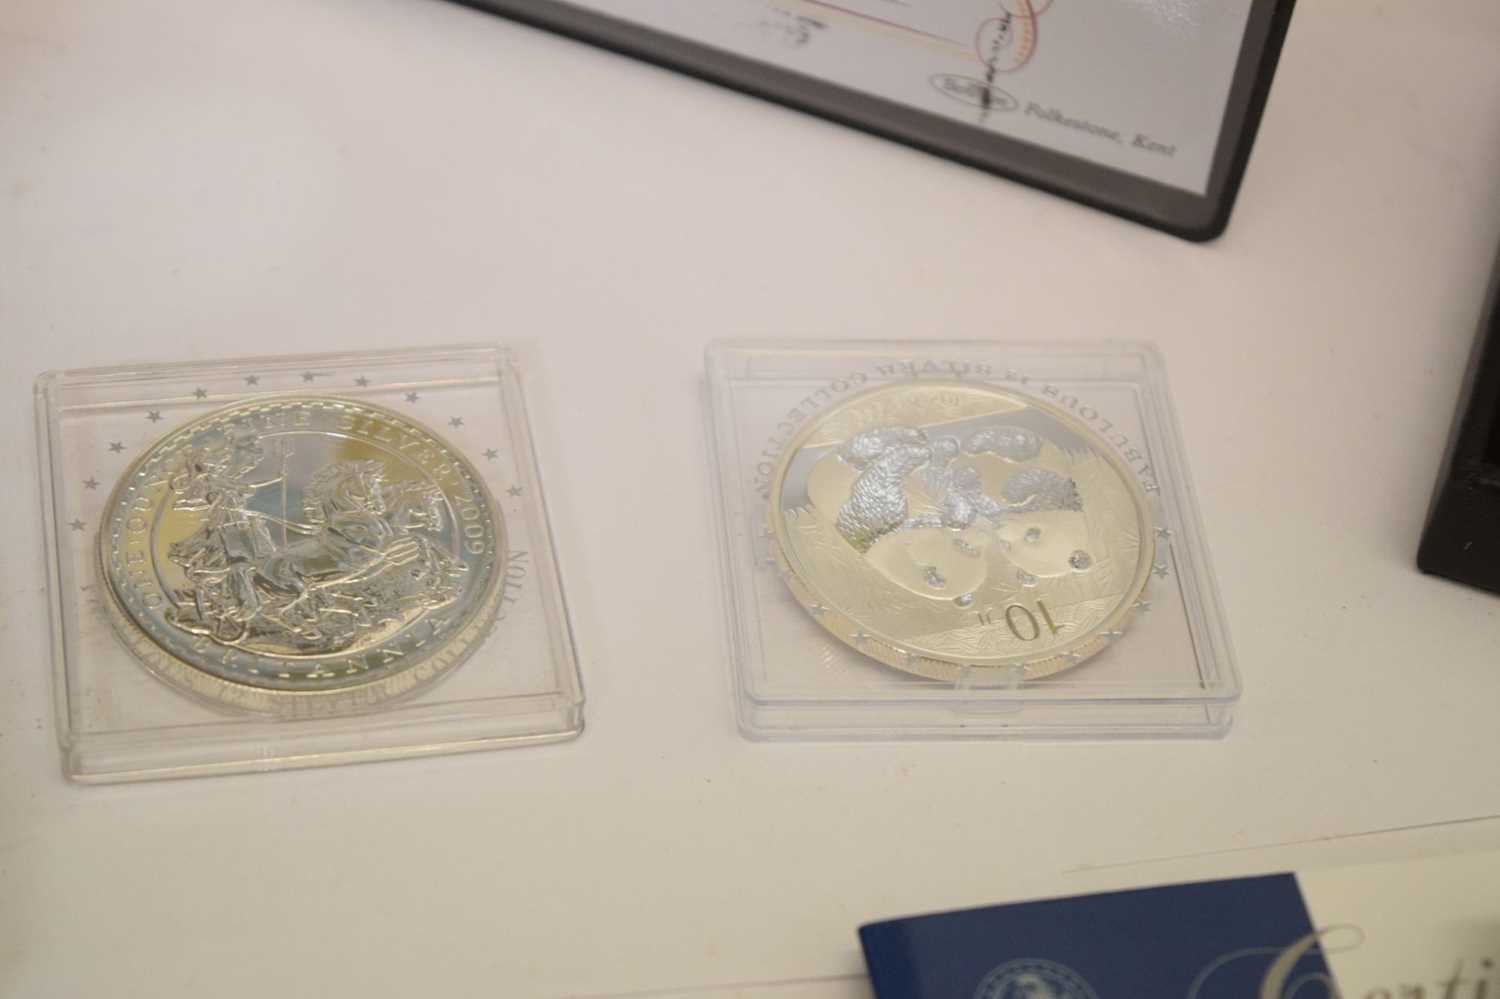 Six silver coins - Australian 1oz Kangaroo Road Sign $1 2013, etc - Image 4 of 7